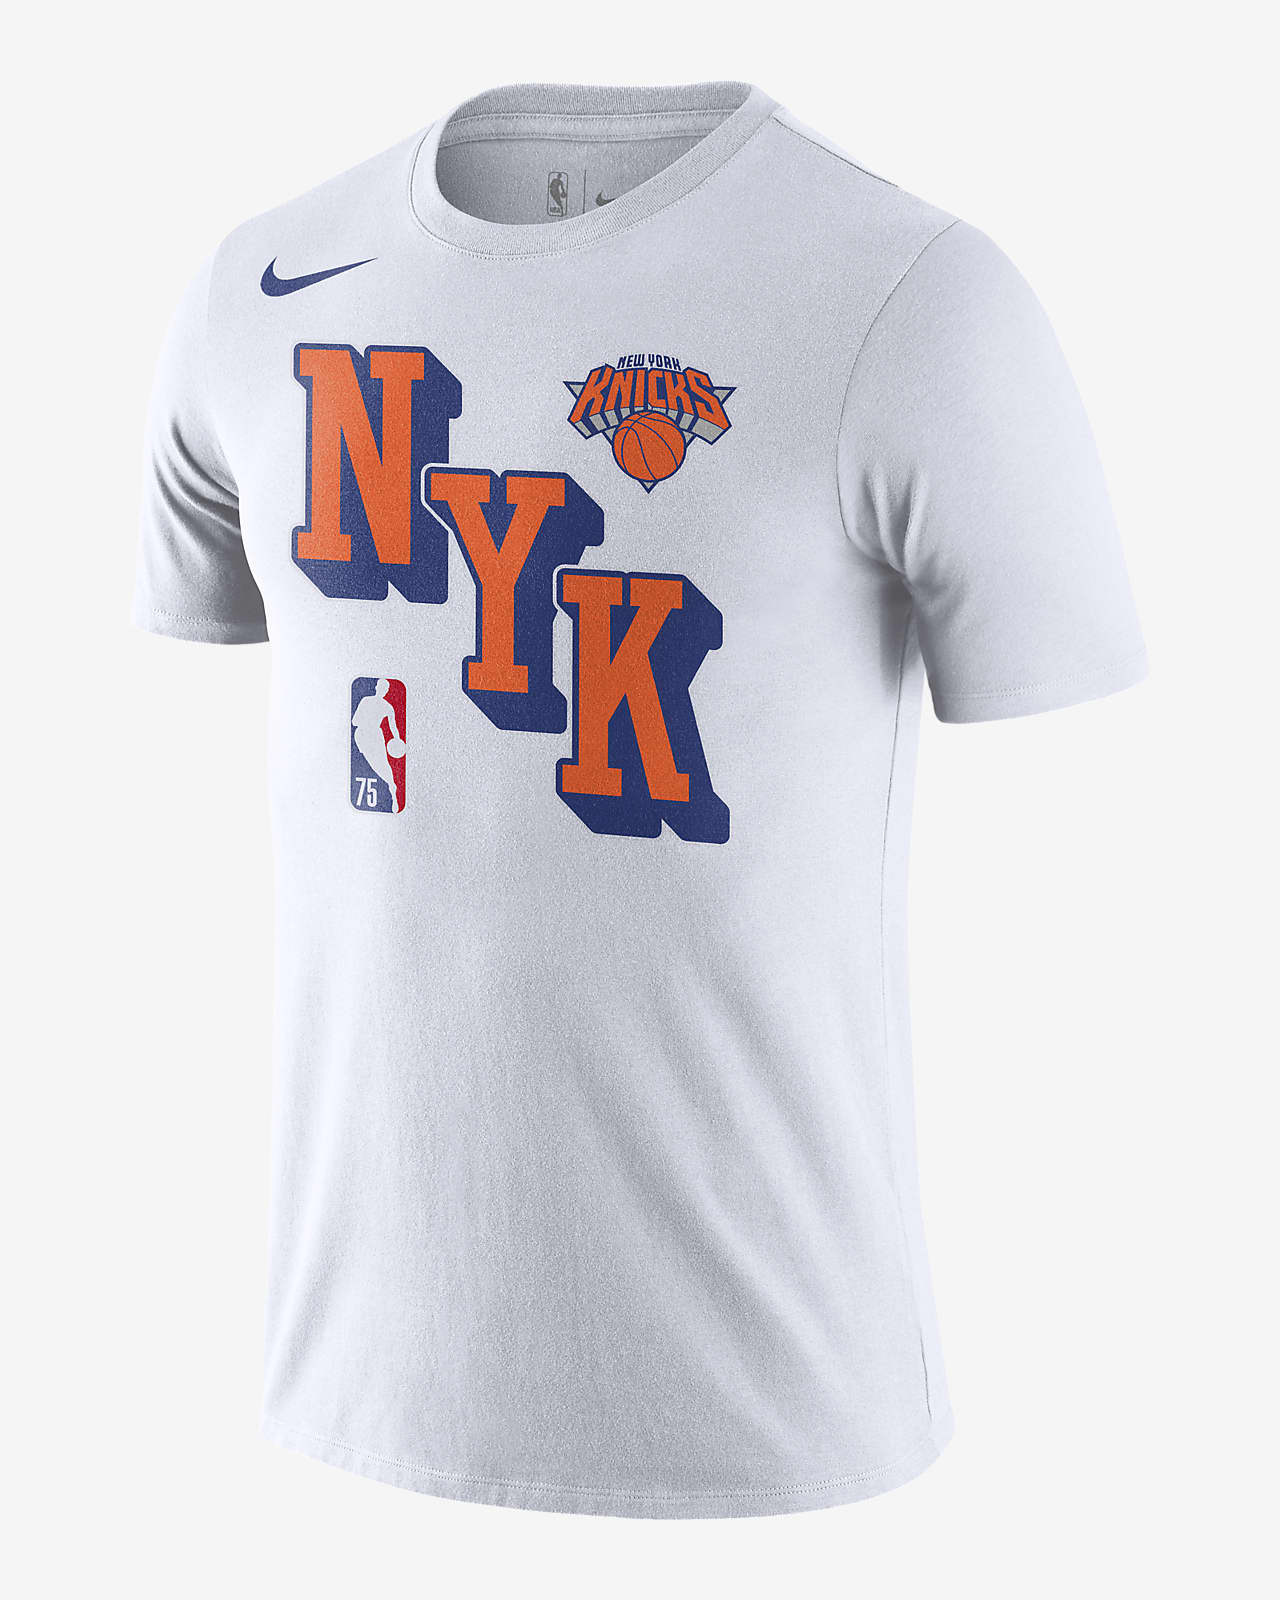 New York Knicks Men's Nike Dri-FIT NBA T-Shirt